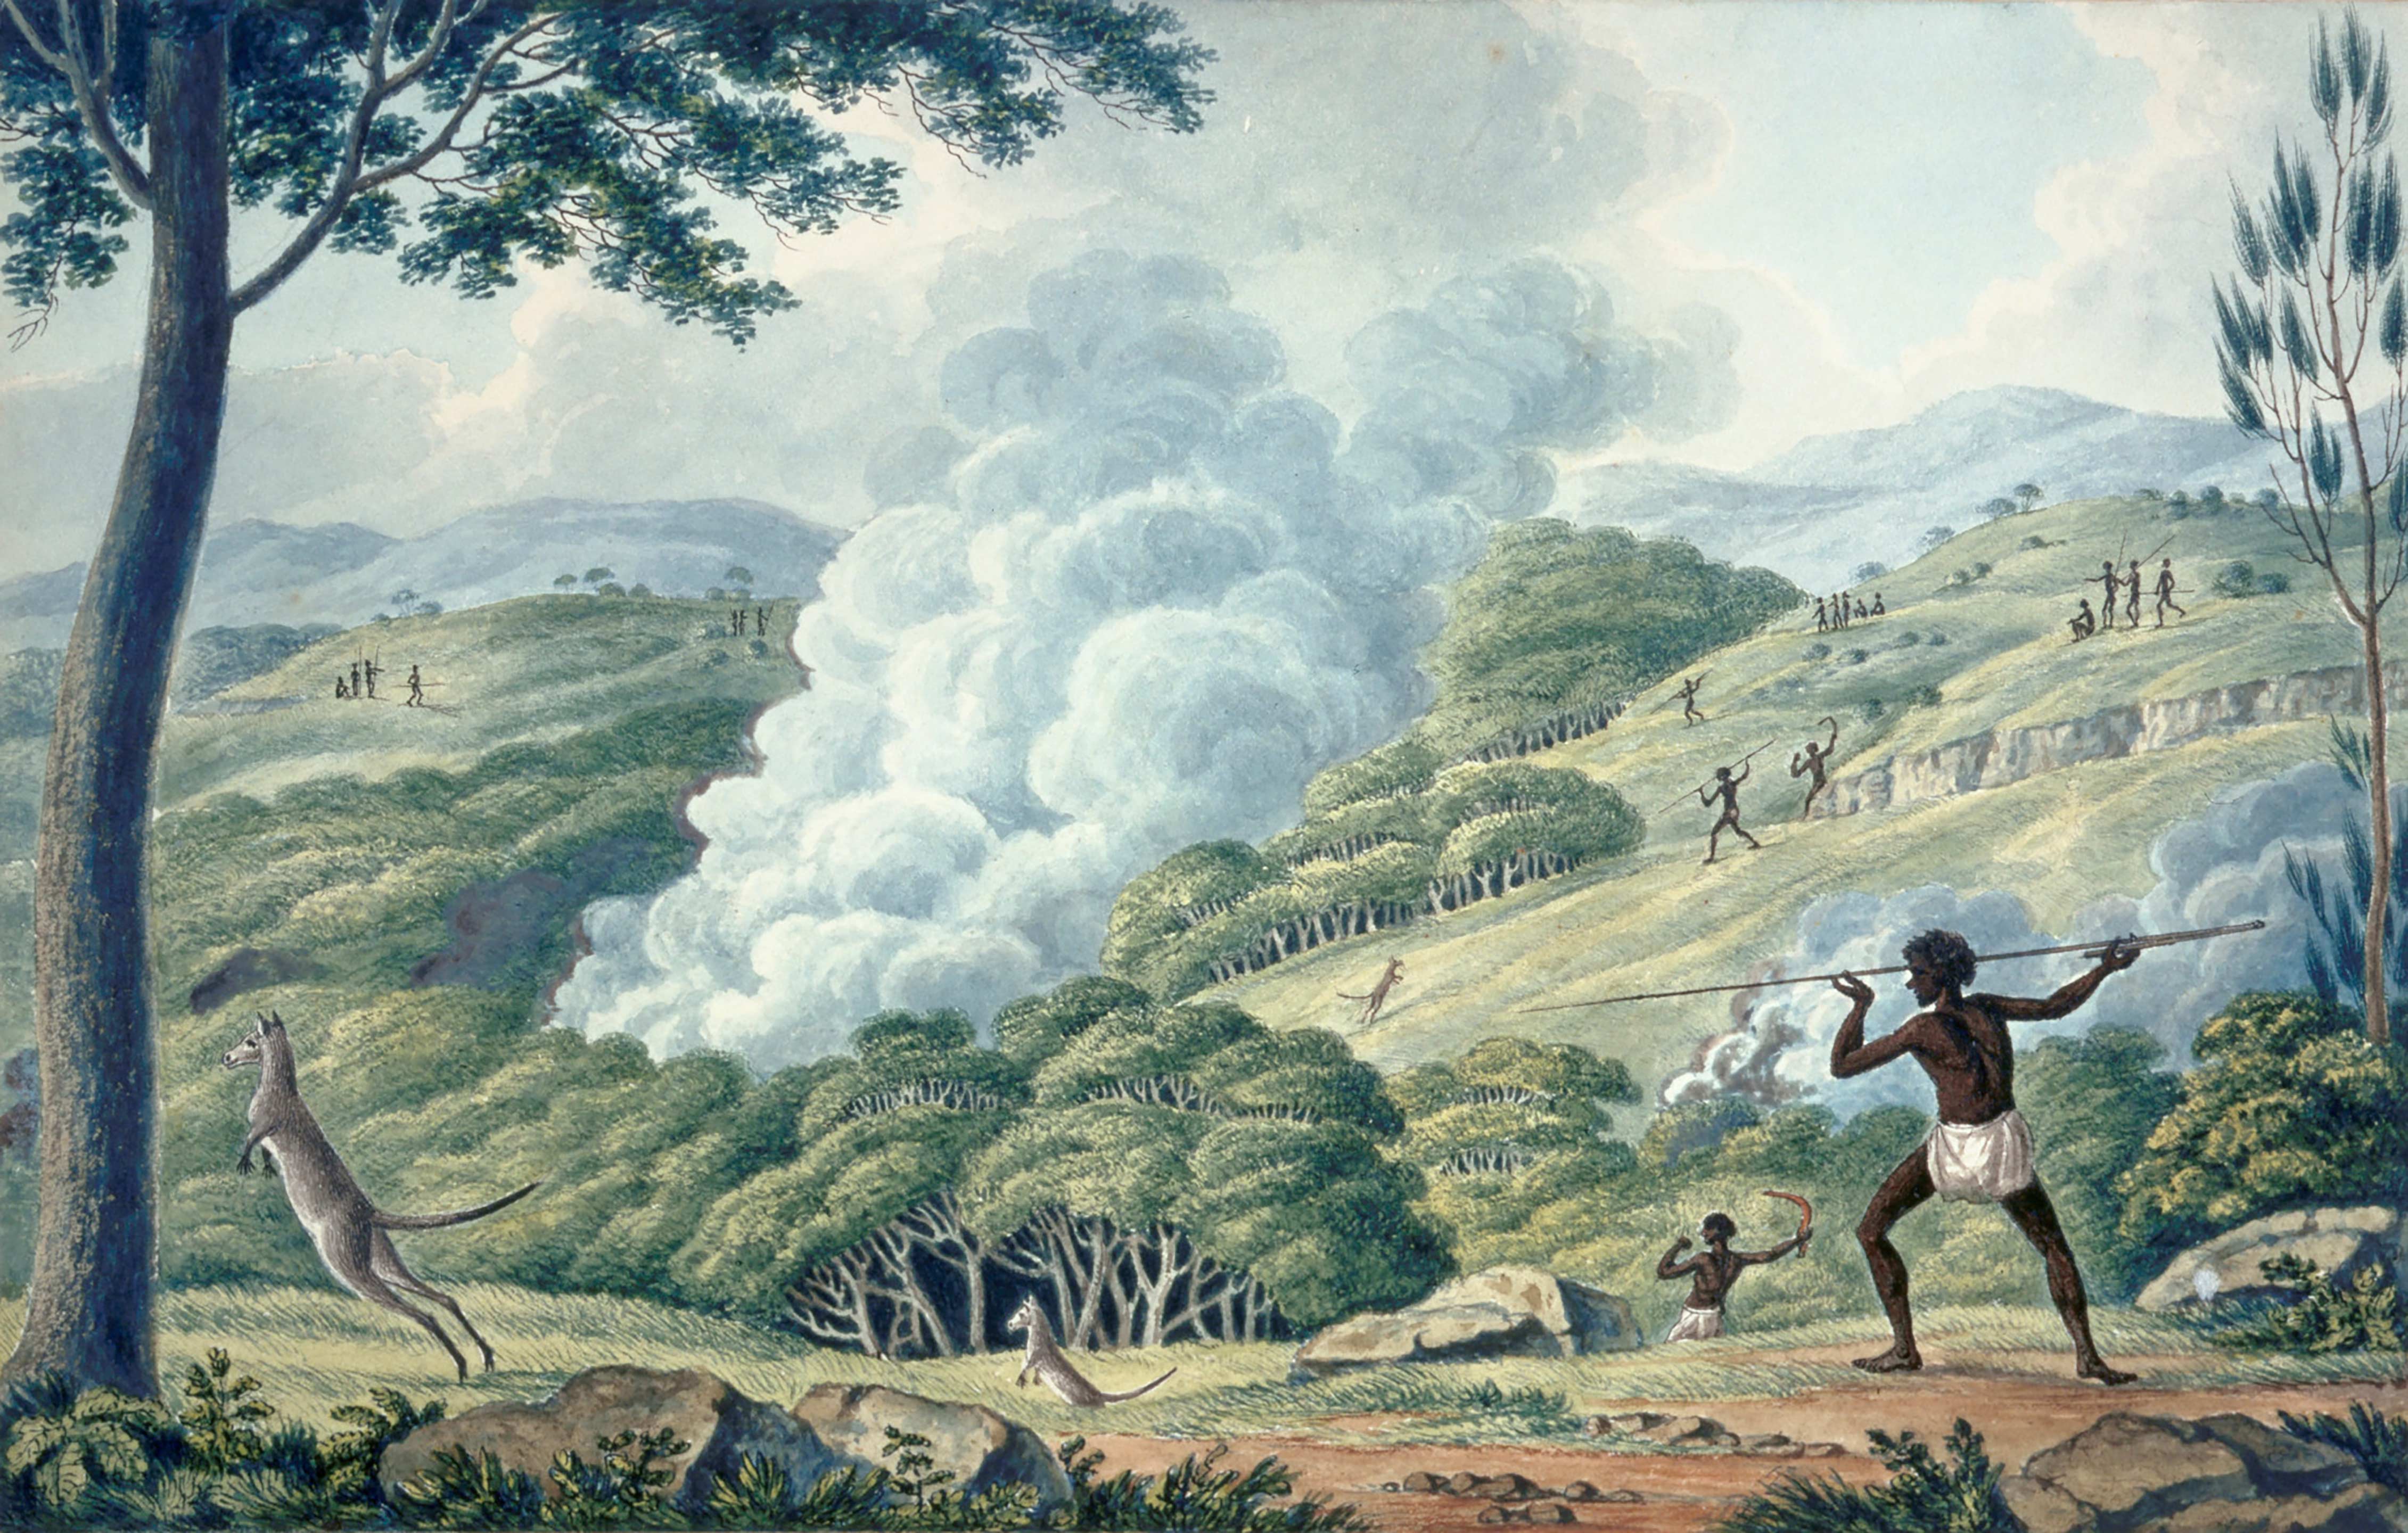 Aborigines using fire to hunt kangaroos, about 1817, Joseph Lycett